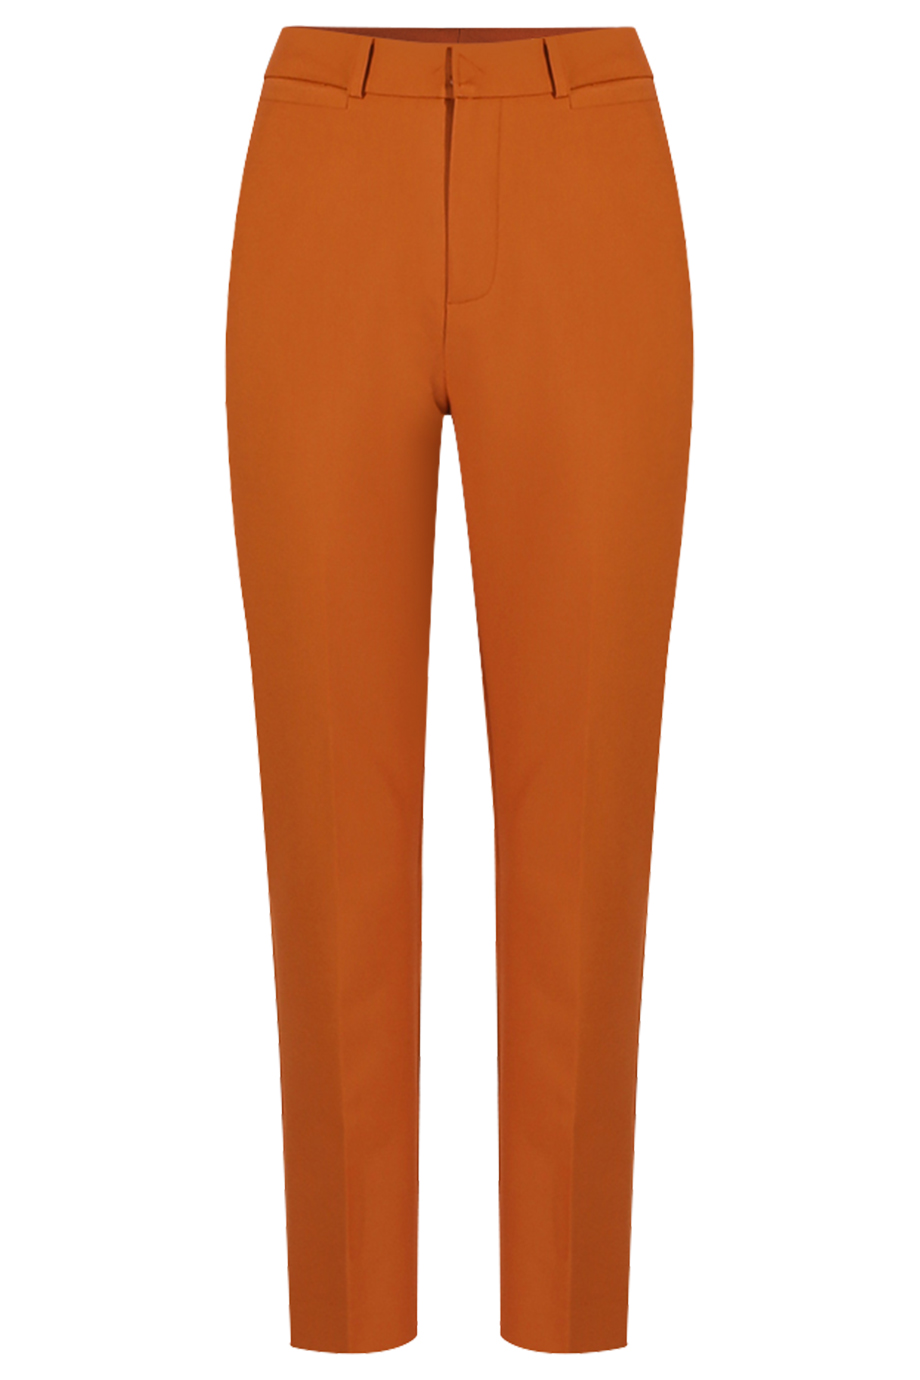 Quần công sở  Collette High-waisted Suit Pants/  Cinnamon 2184